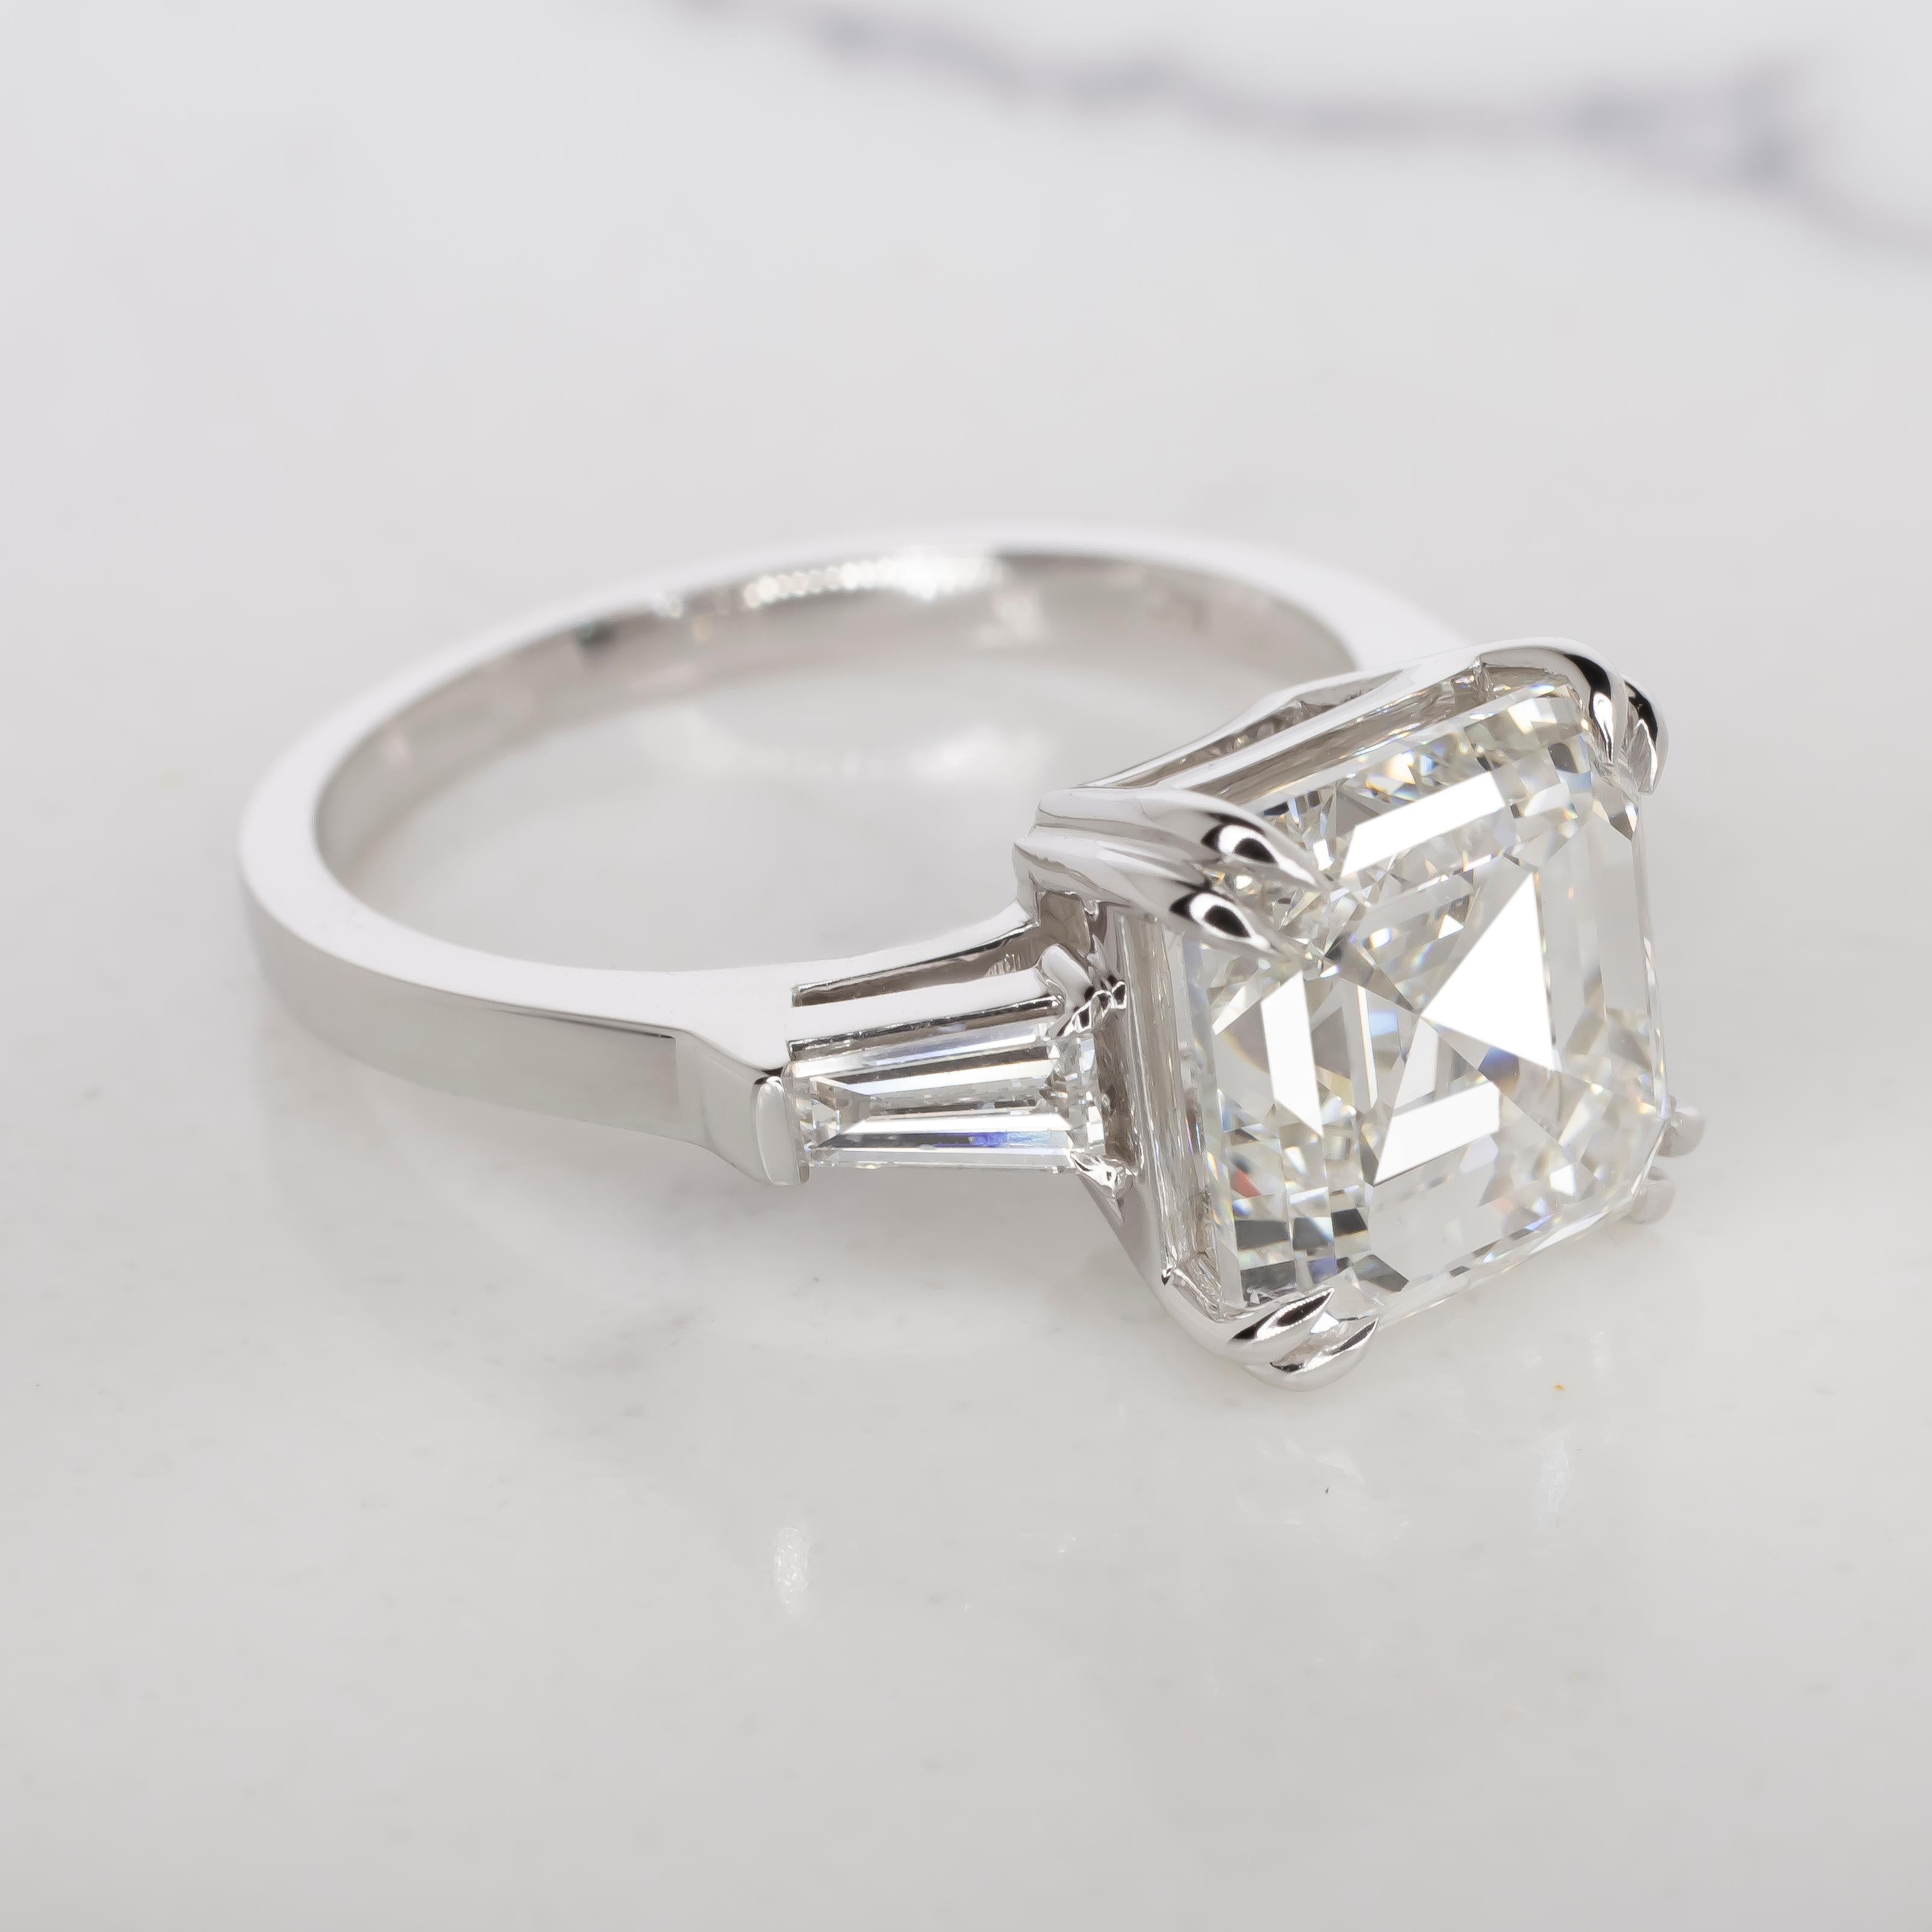 Modern EXCEPTIONAL GIA Certified 5 Carat VS2 Asscher Cut Diamond Ring For Sale